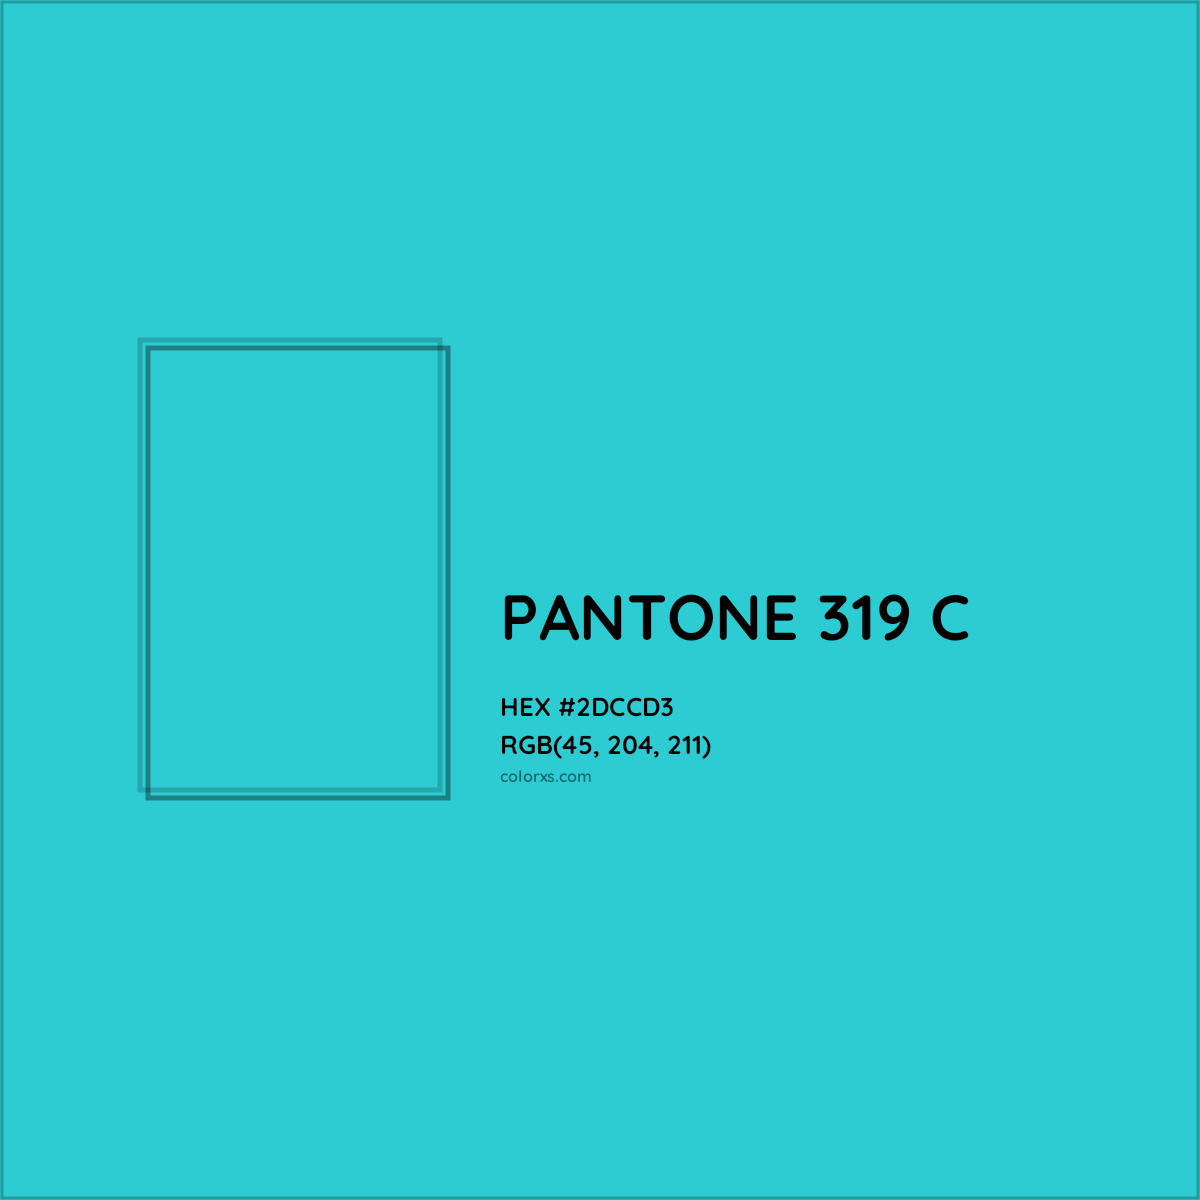 HEX #2DCCD3 PANTONE 319 C CMS Pantone PMS - Color Code